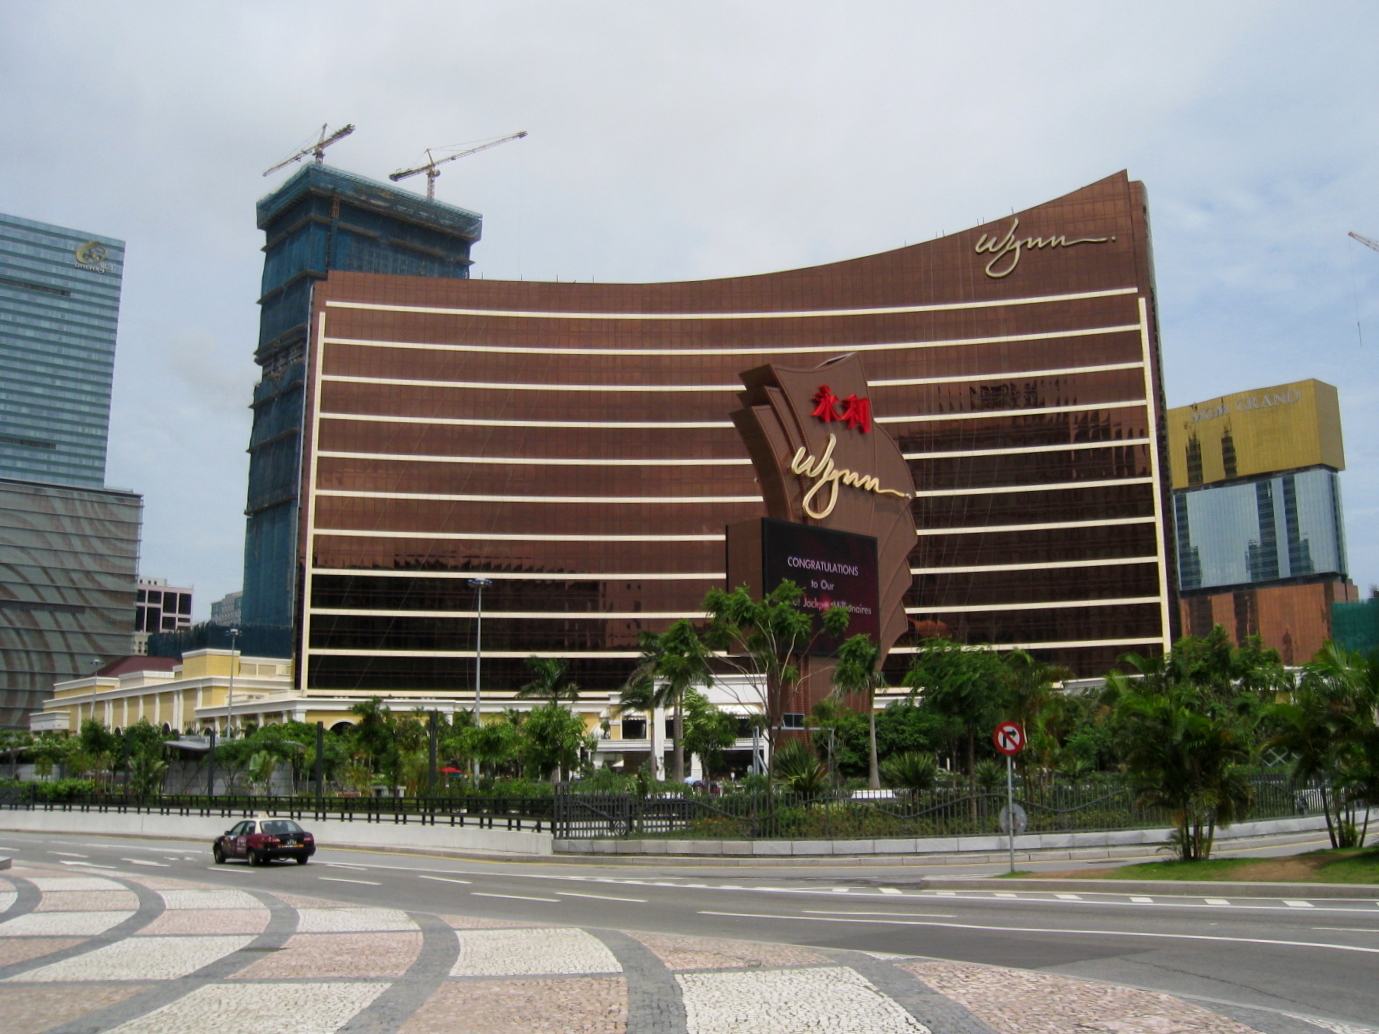 Outside the Wynn Casino in Macau